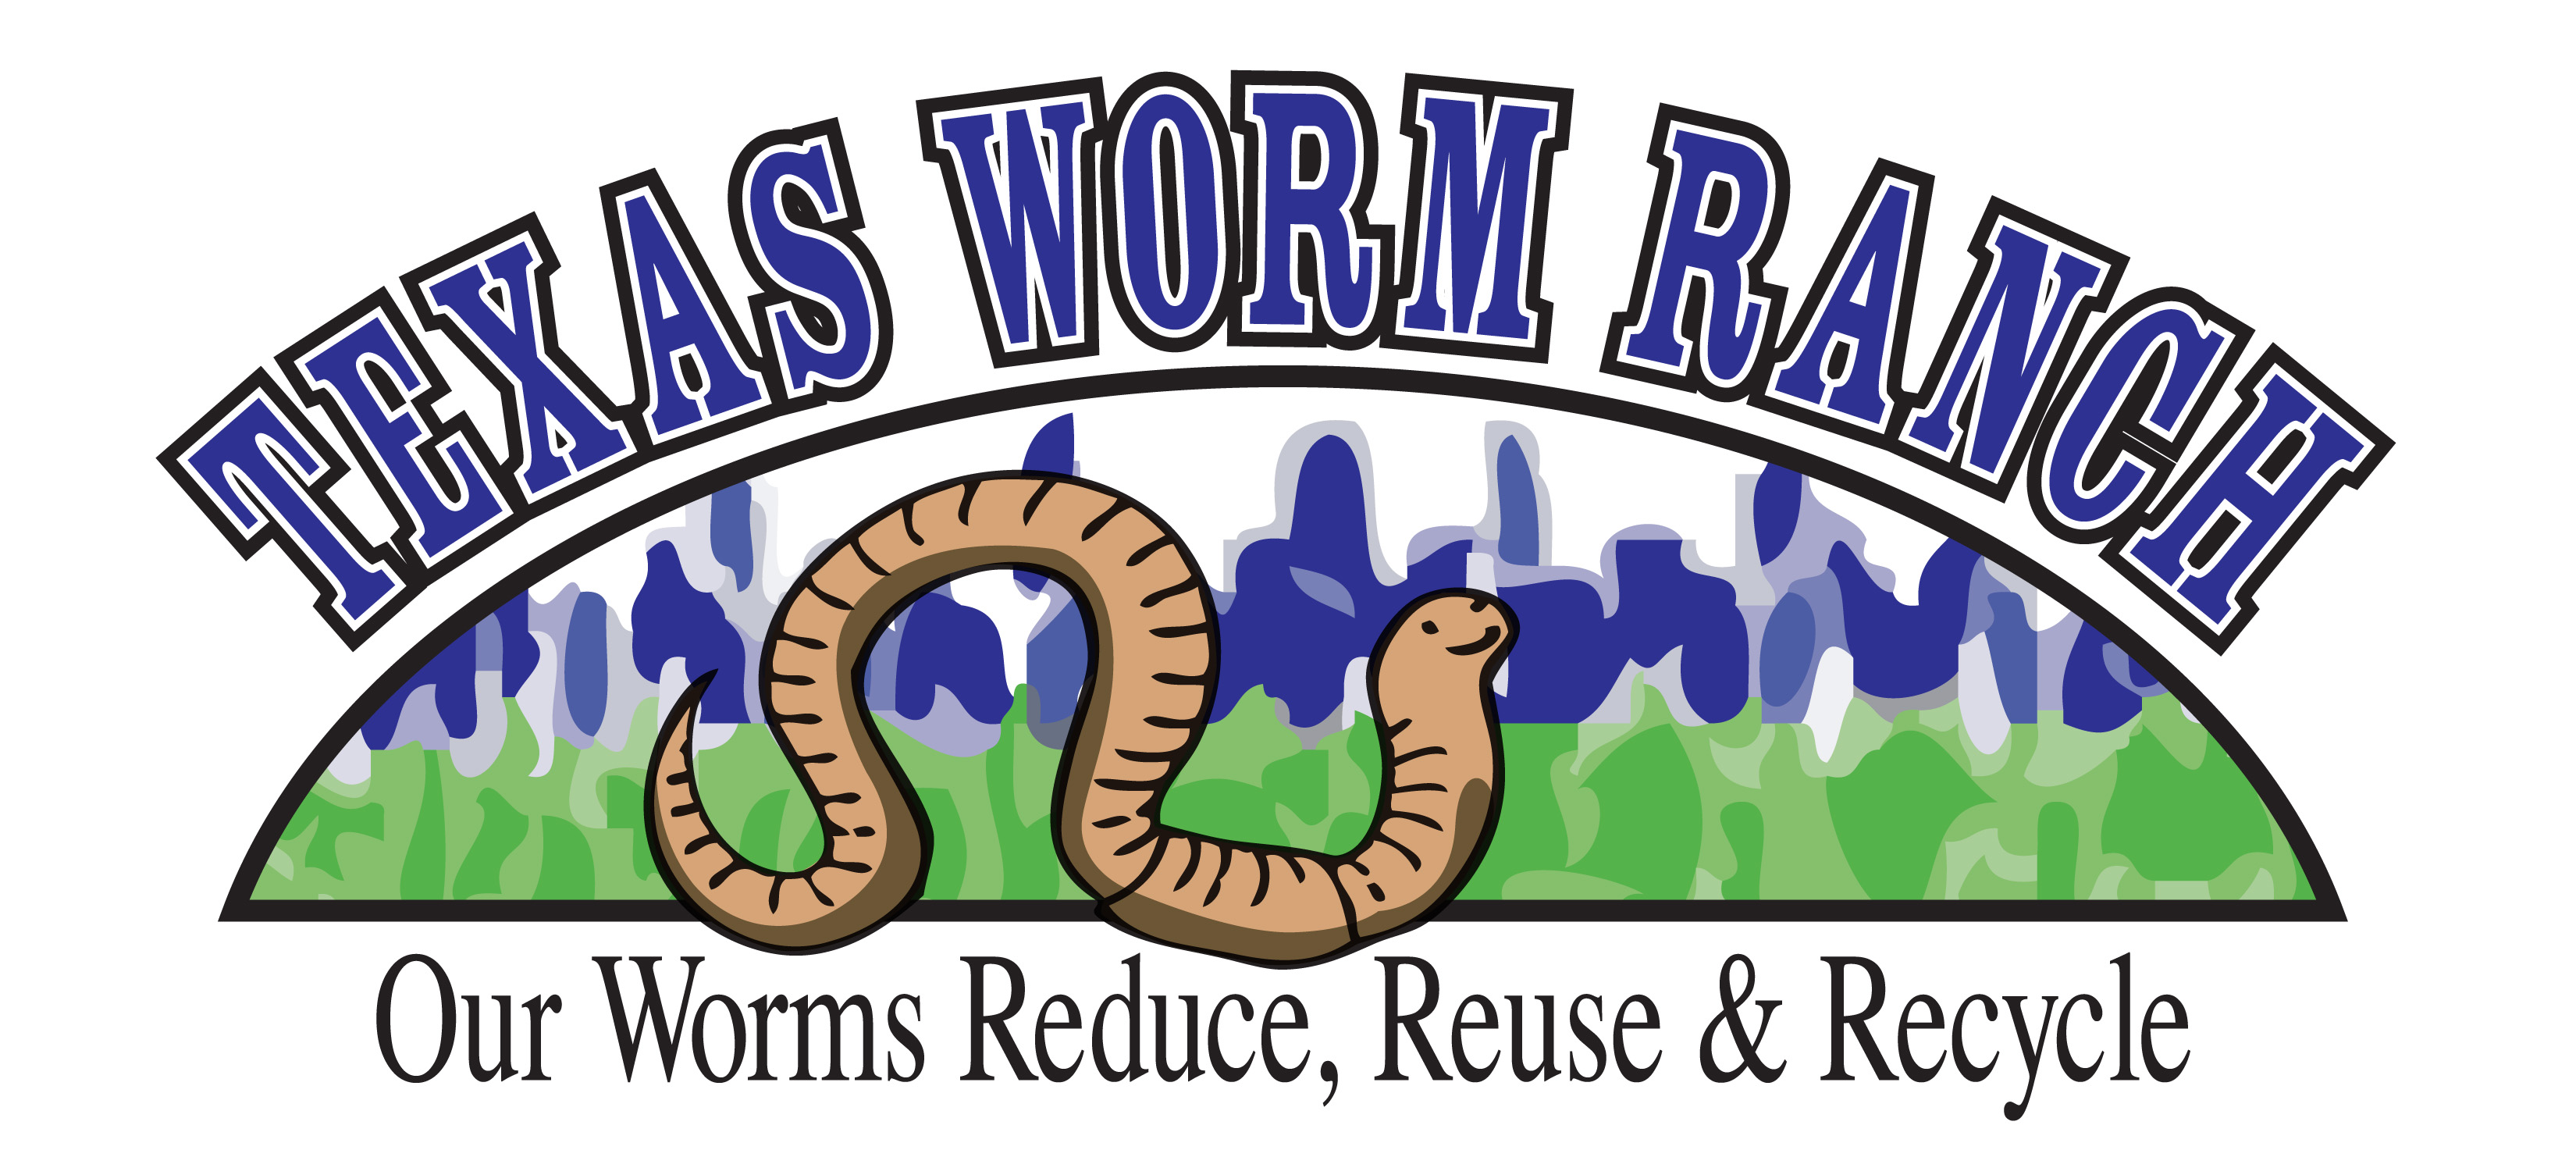 Texas Worm Ranch